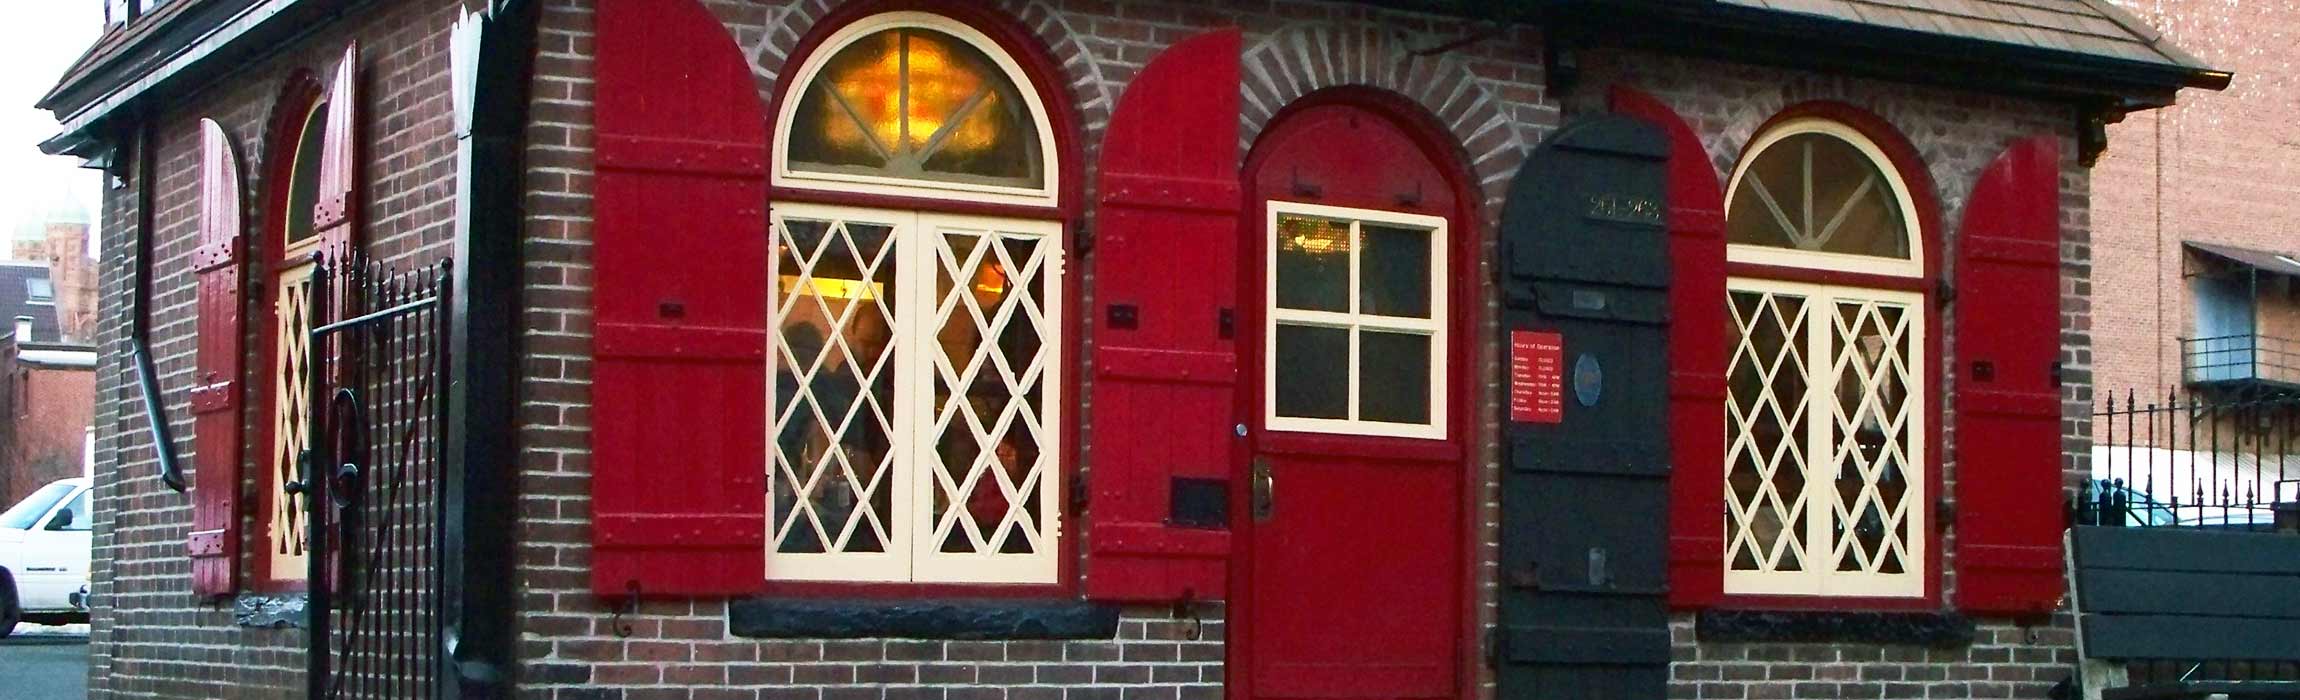 Brick exterior of Louis' Lunch restaurant in New Haven, CT with red barn door shutters